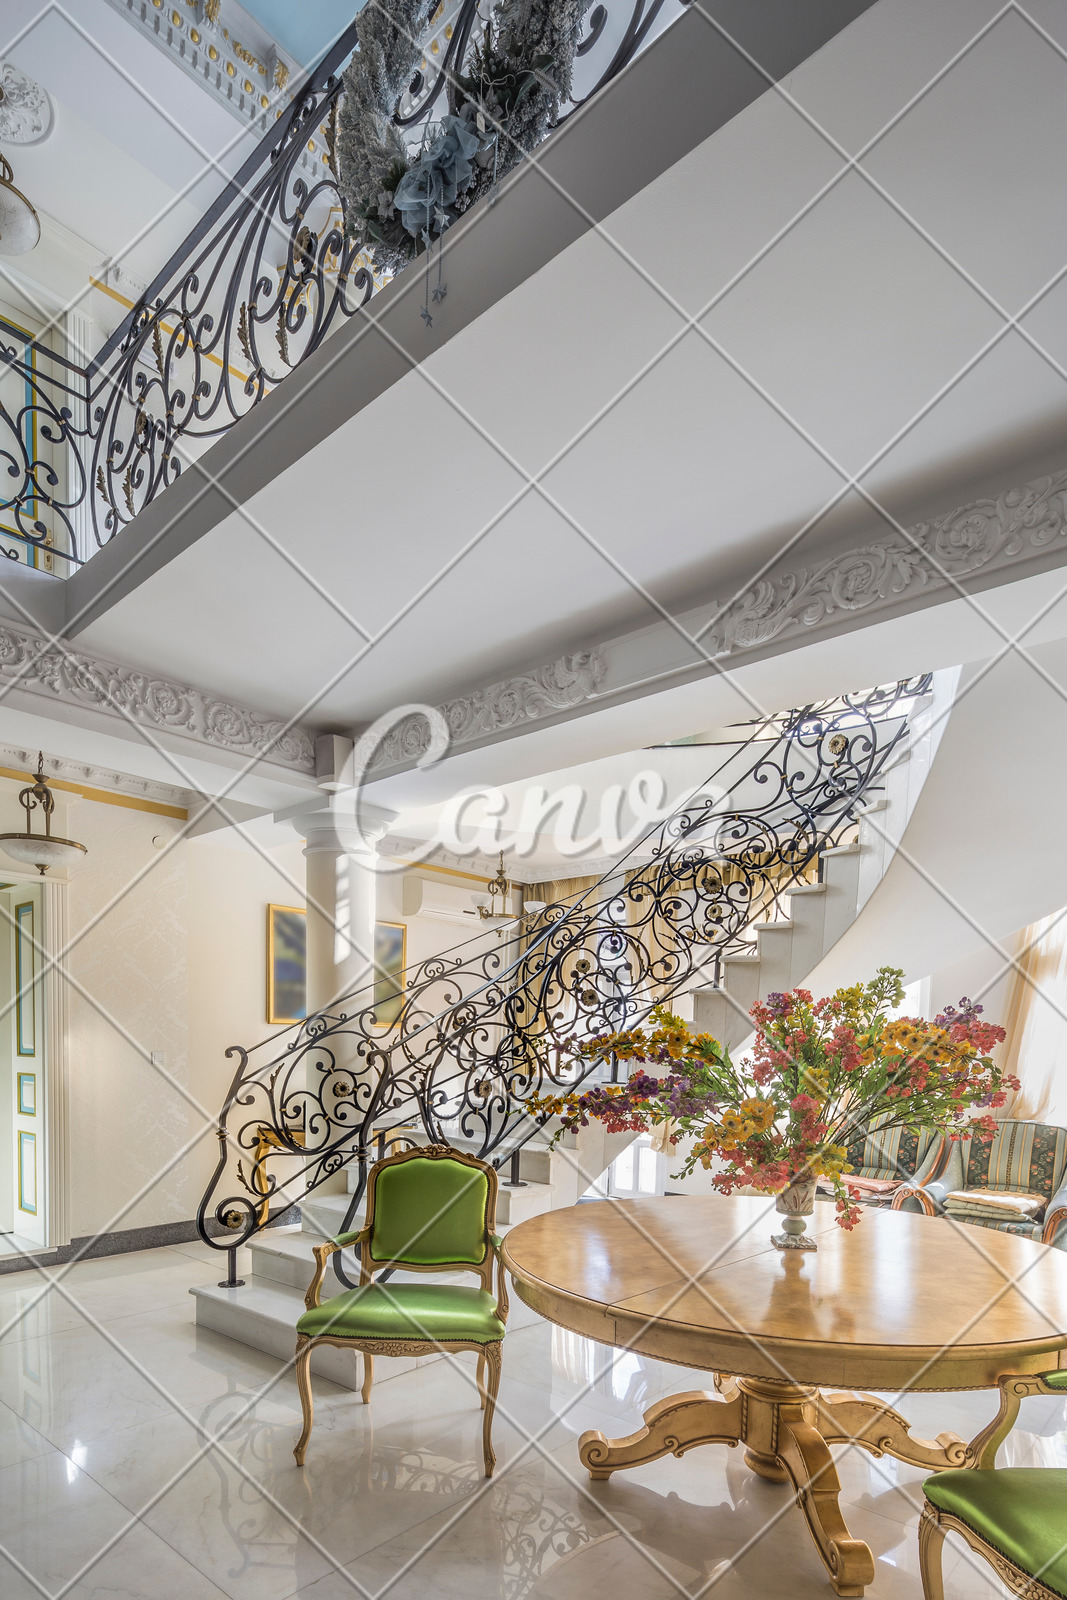 Luxury Lobby Interior Staircase With Handmade Wrought Iron